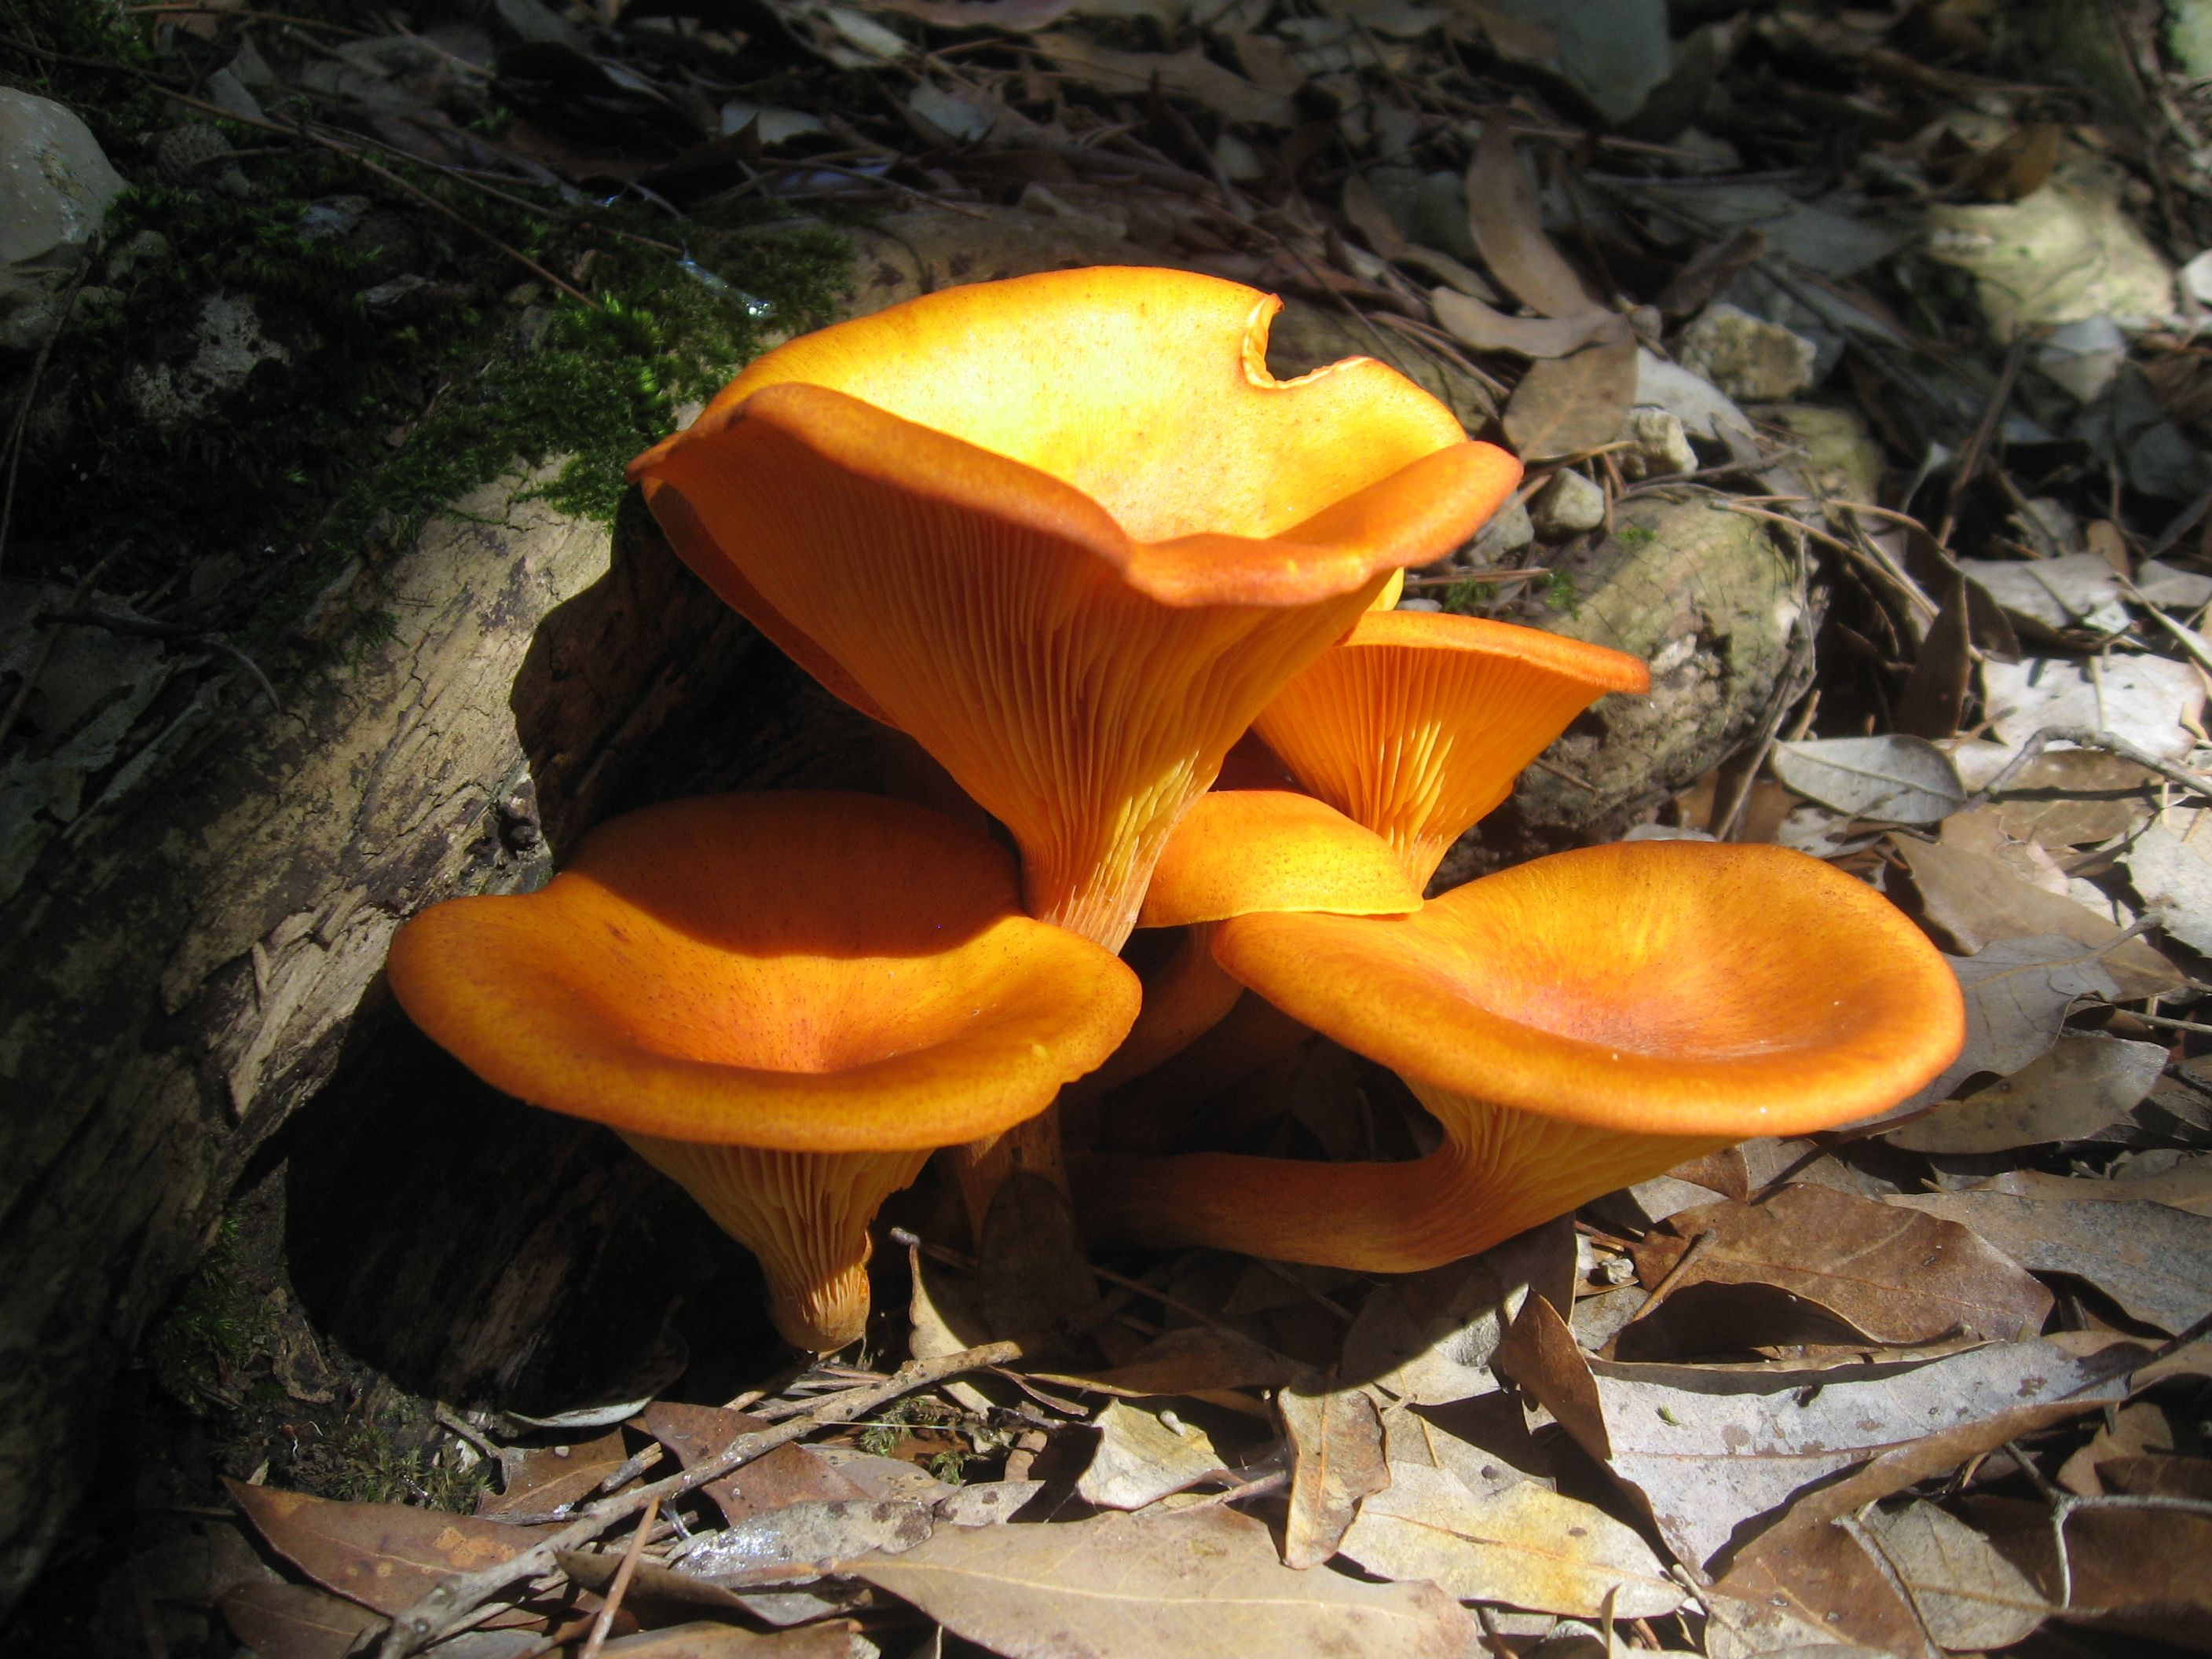 Jack-O-Lantern, a poisonous mushroom sometimes mistaken for a ...